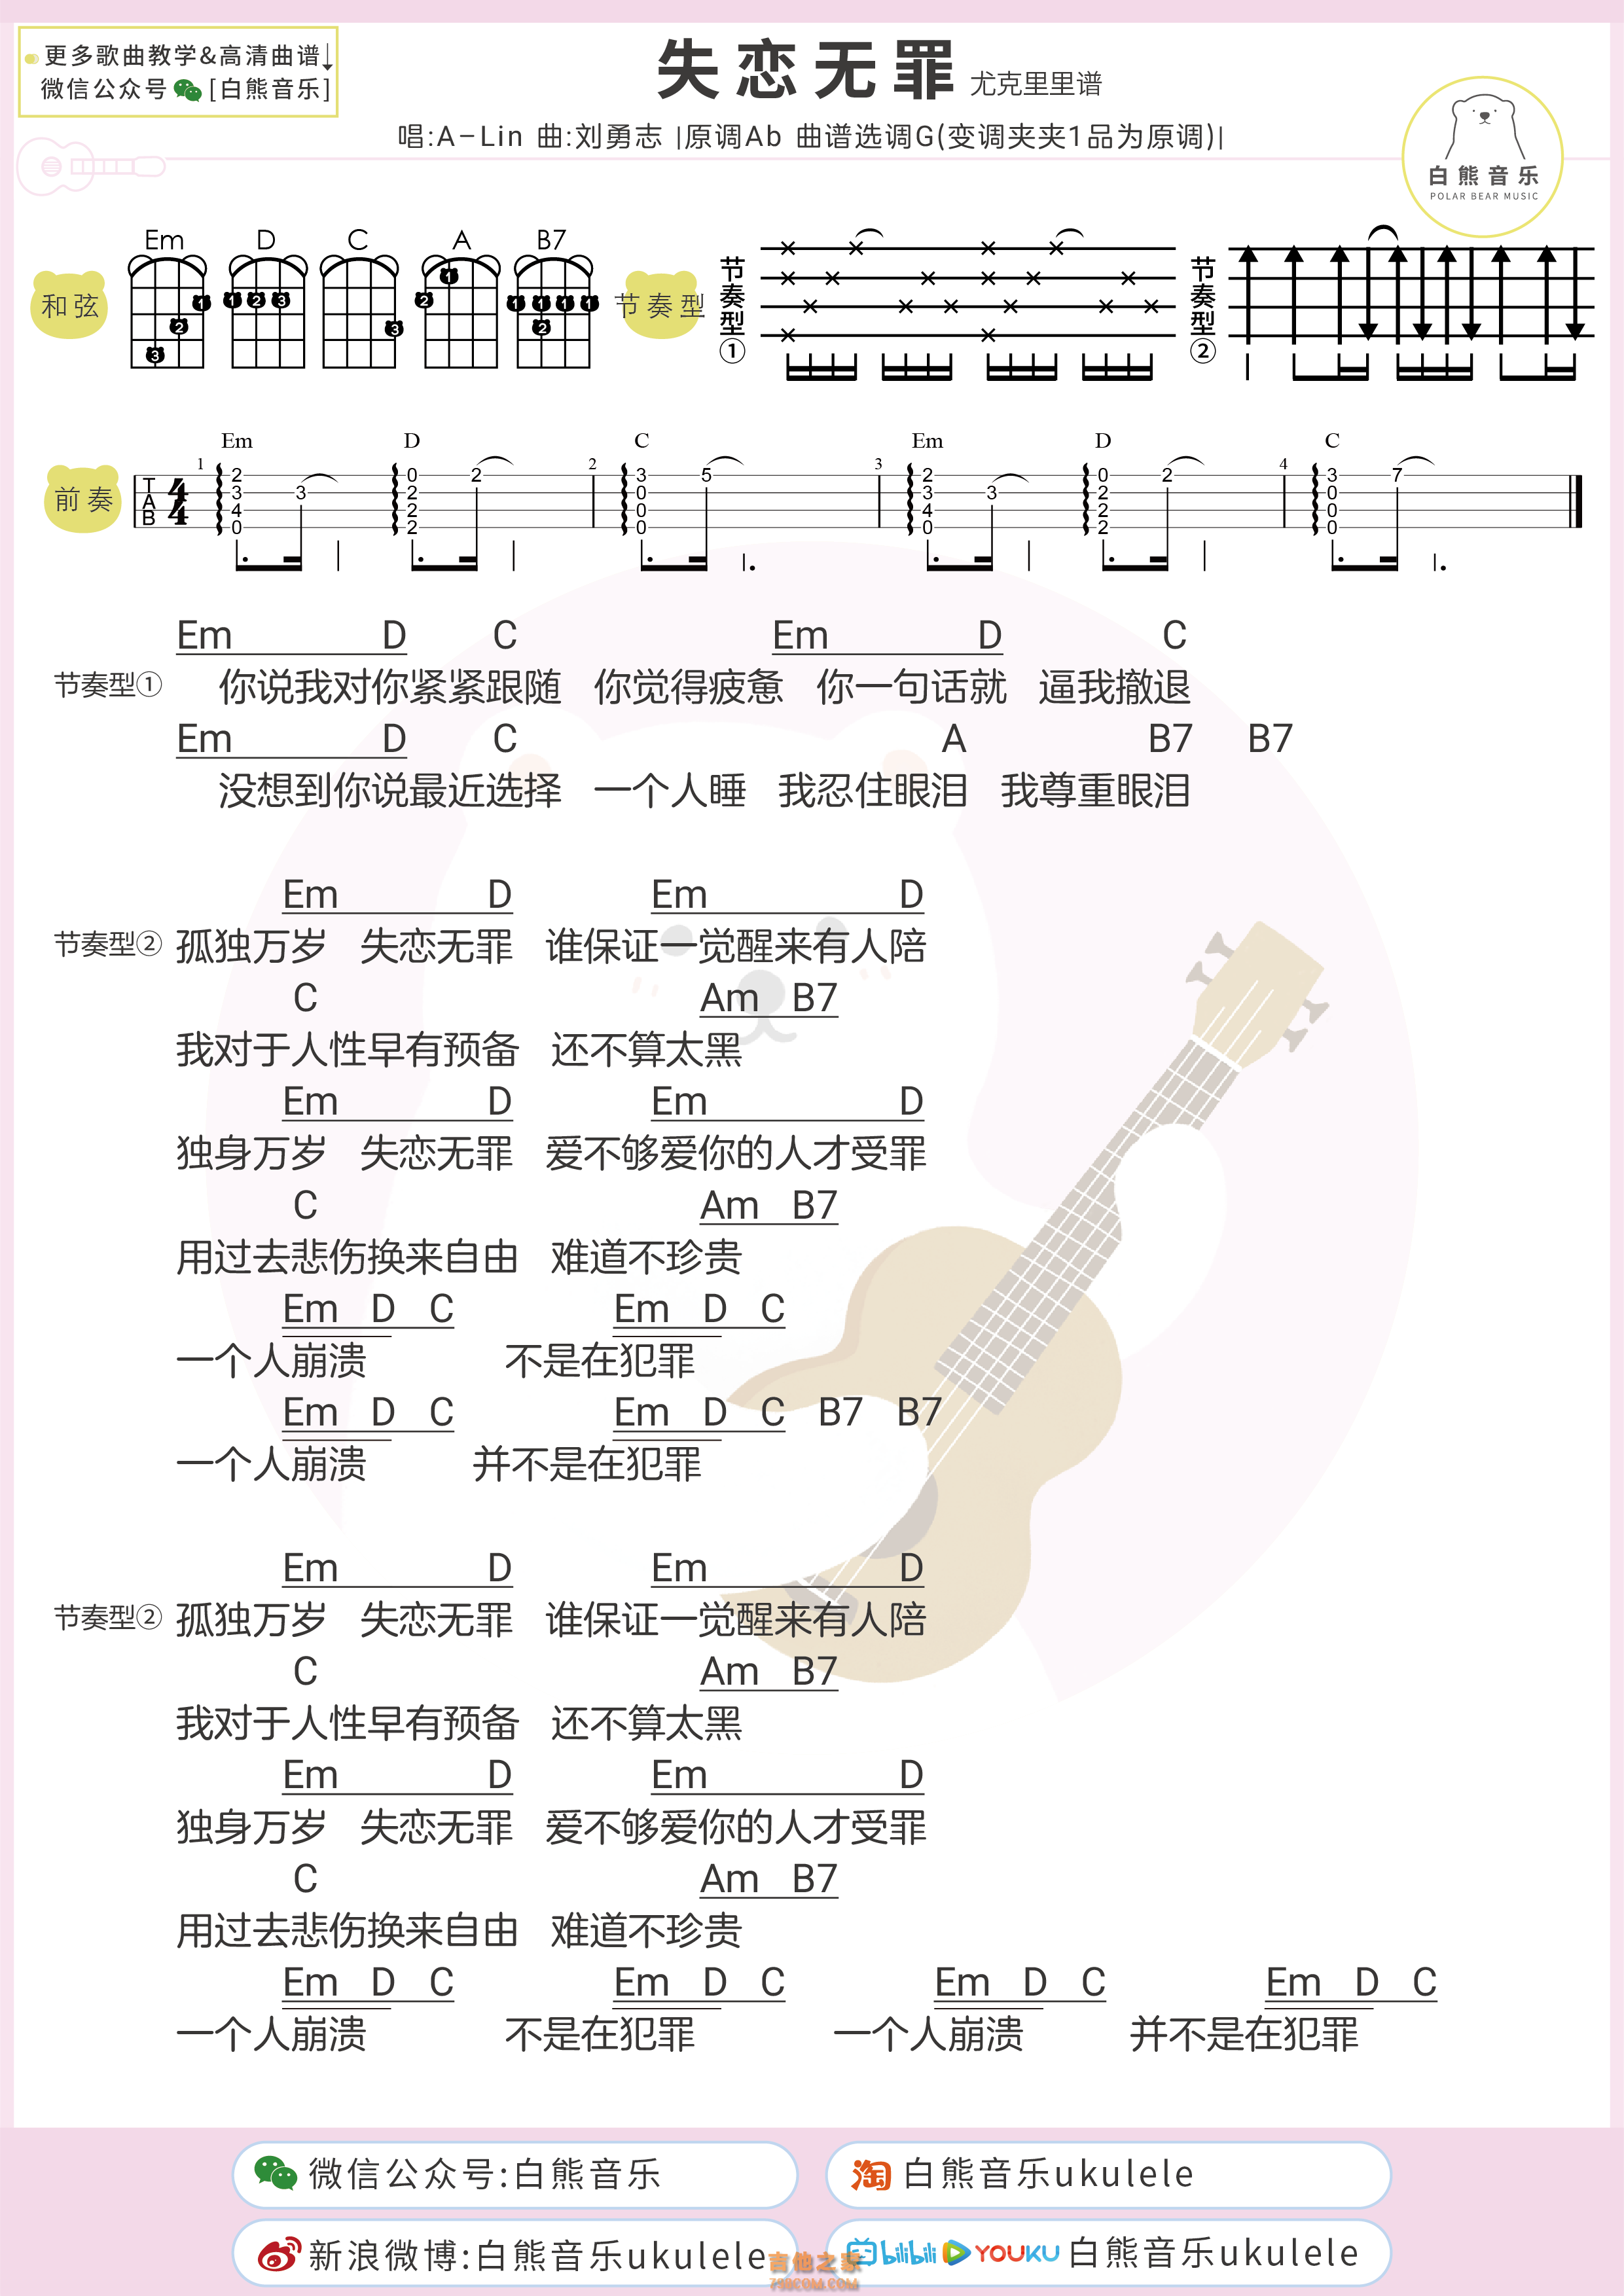 A-Lin《失恋无罪》吉他弹唱谱 白熊音乐 - 吉他谱 - 吉他之家